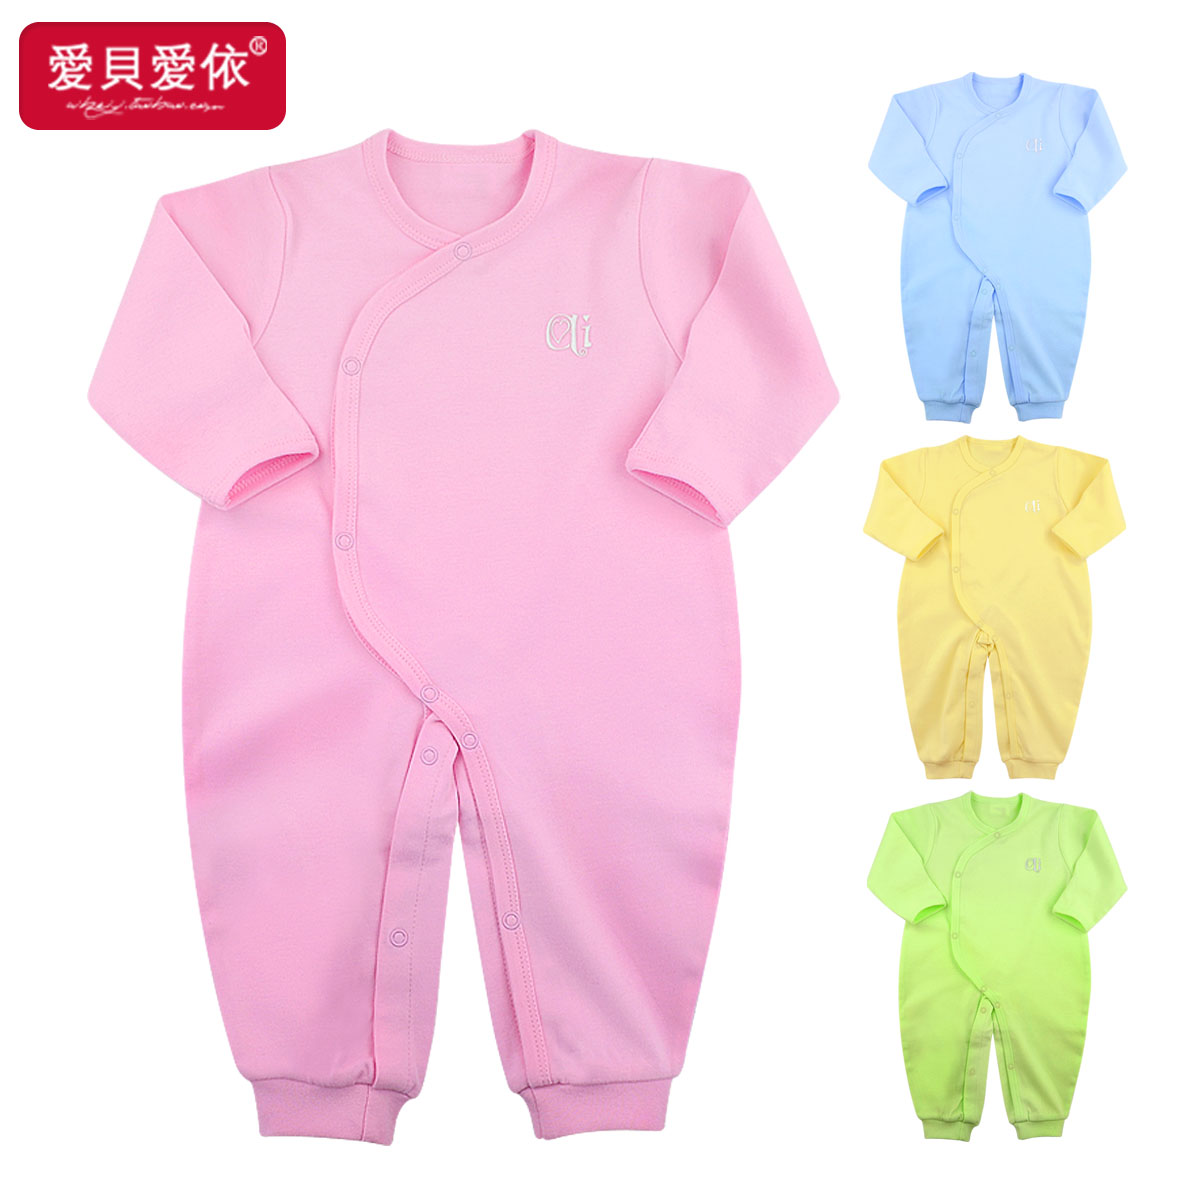 Baby infant underwear 100% cotton 100% cotton set newborn clothes bodysuit romper spring and autumn